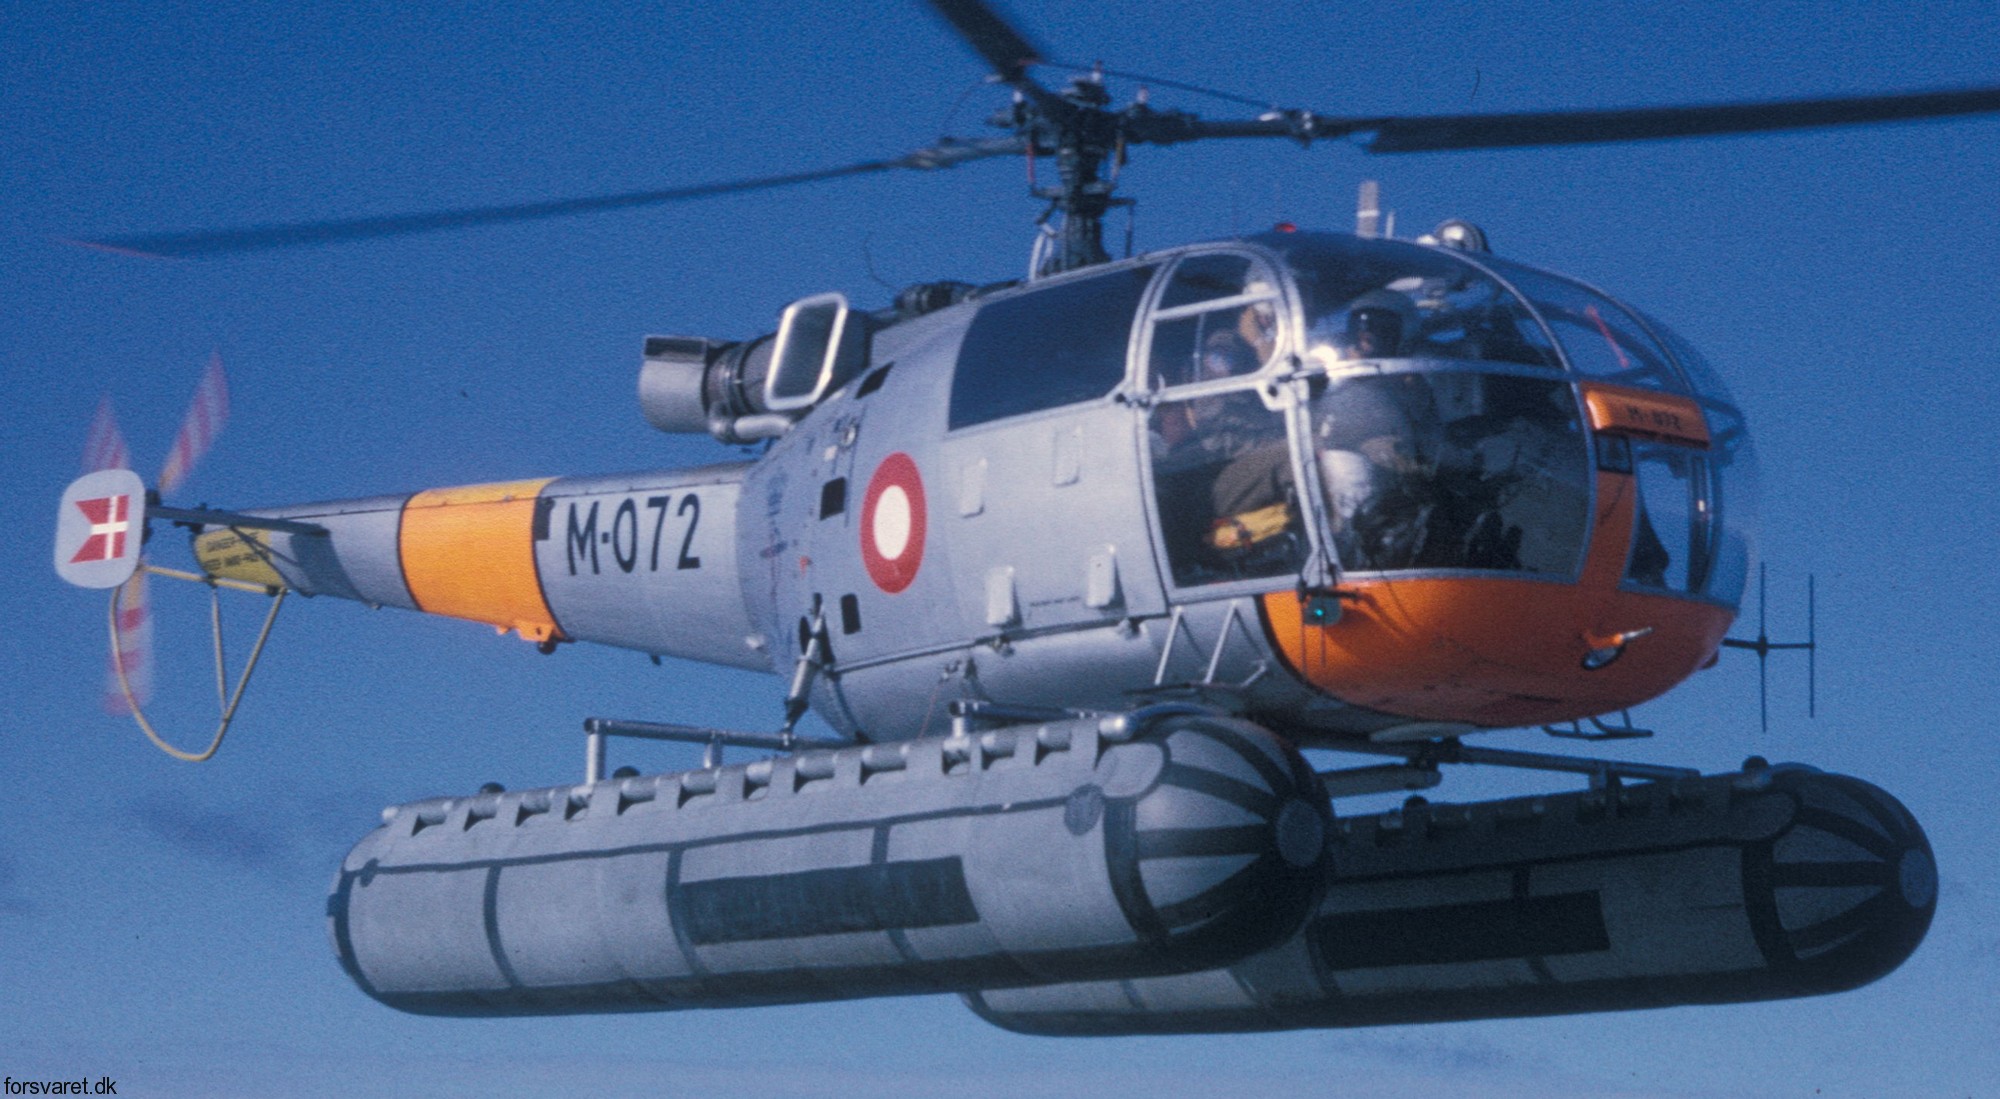 sa 316b alouette iii helicopter royal danish navy søværnet kongelige danske marine sud aviation m-072 05